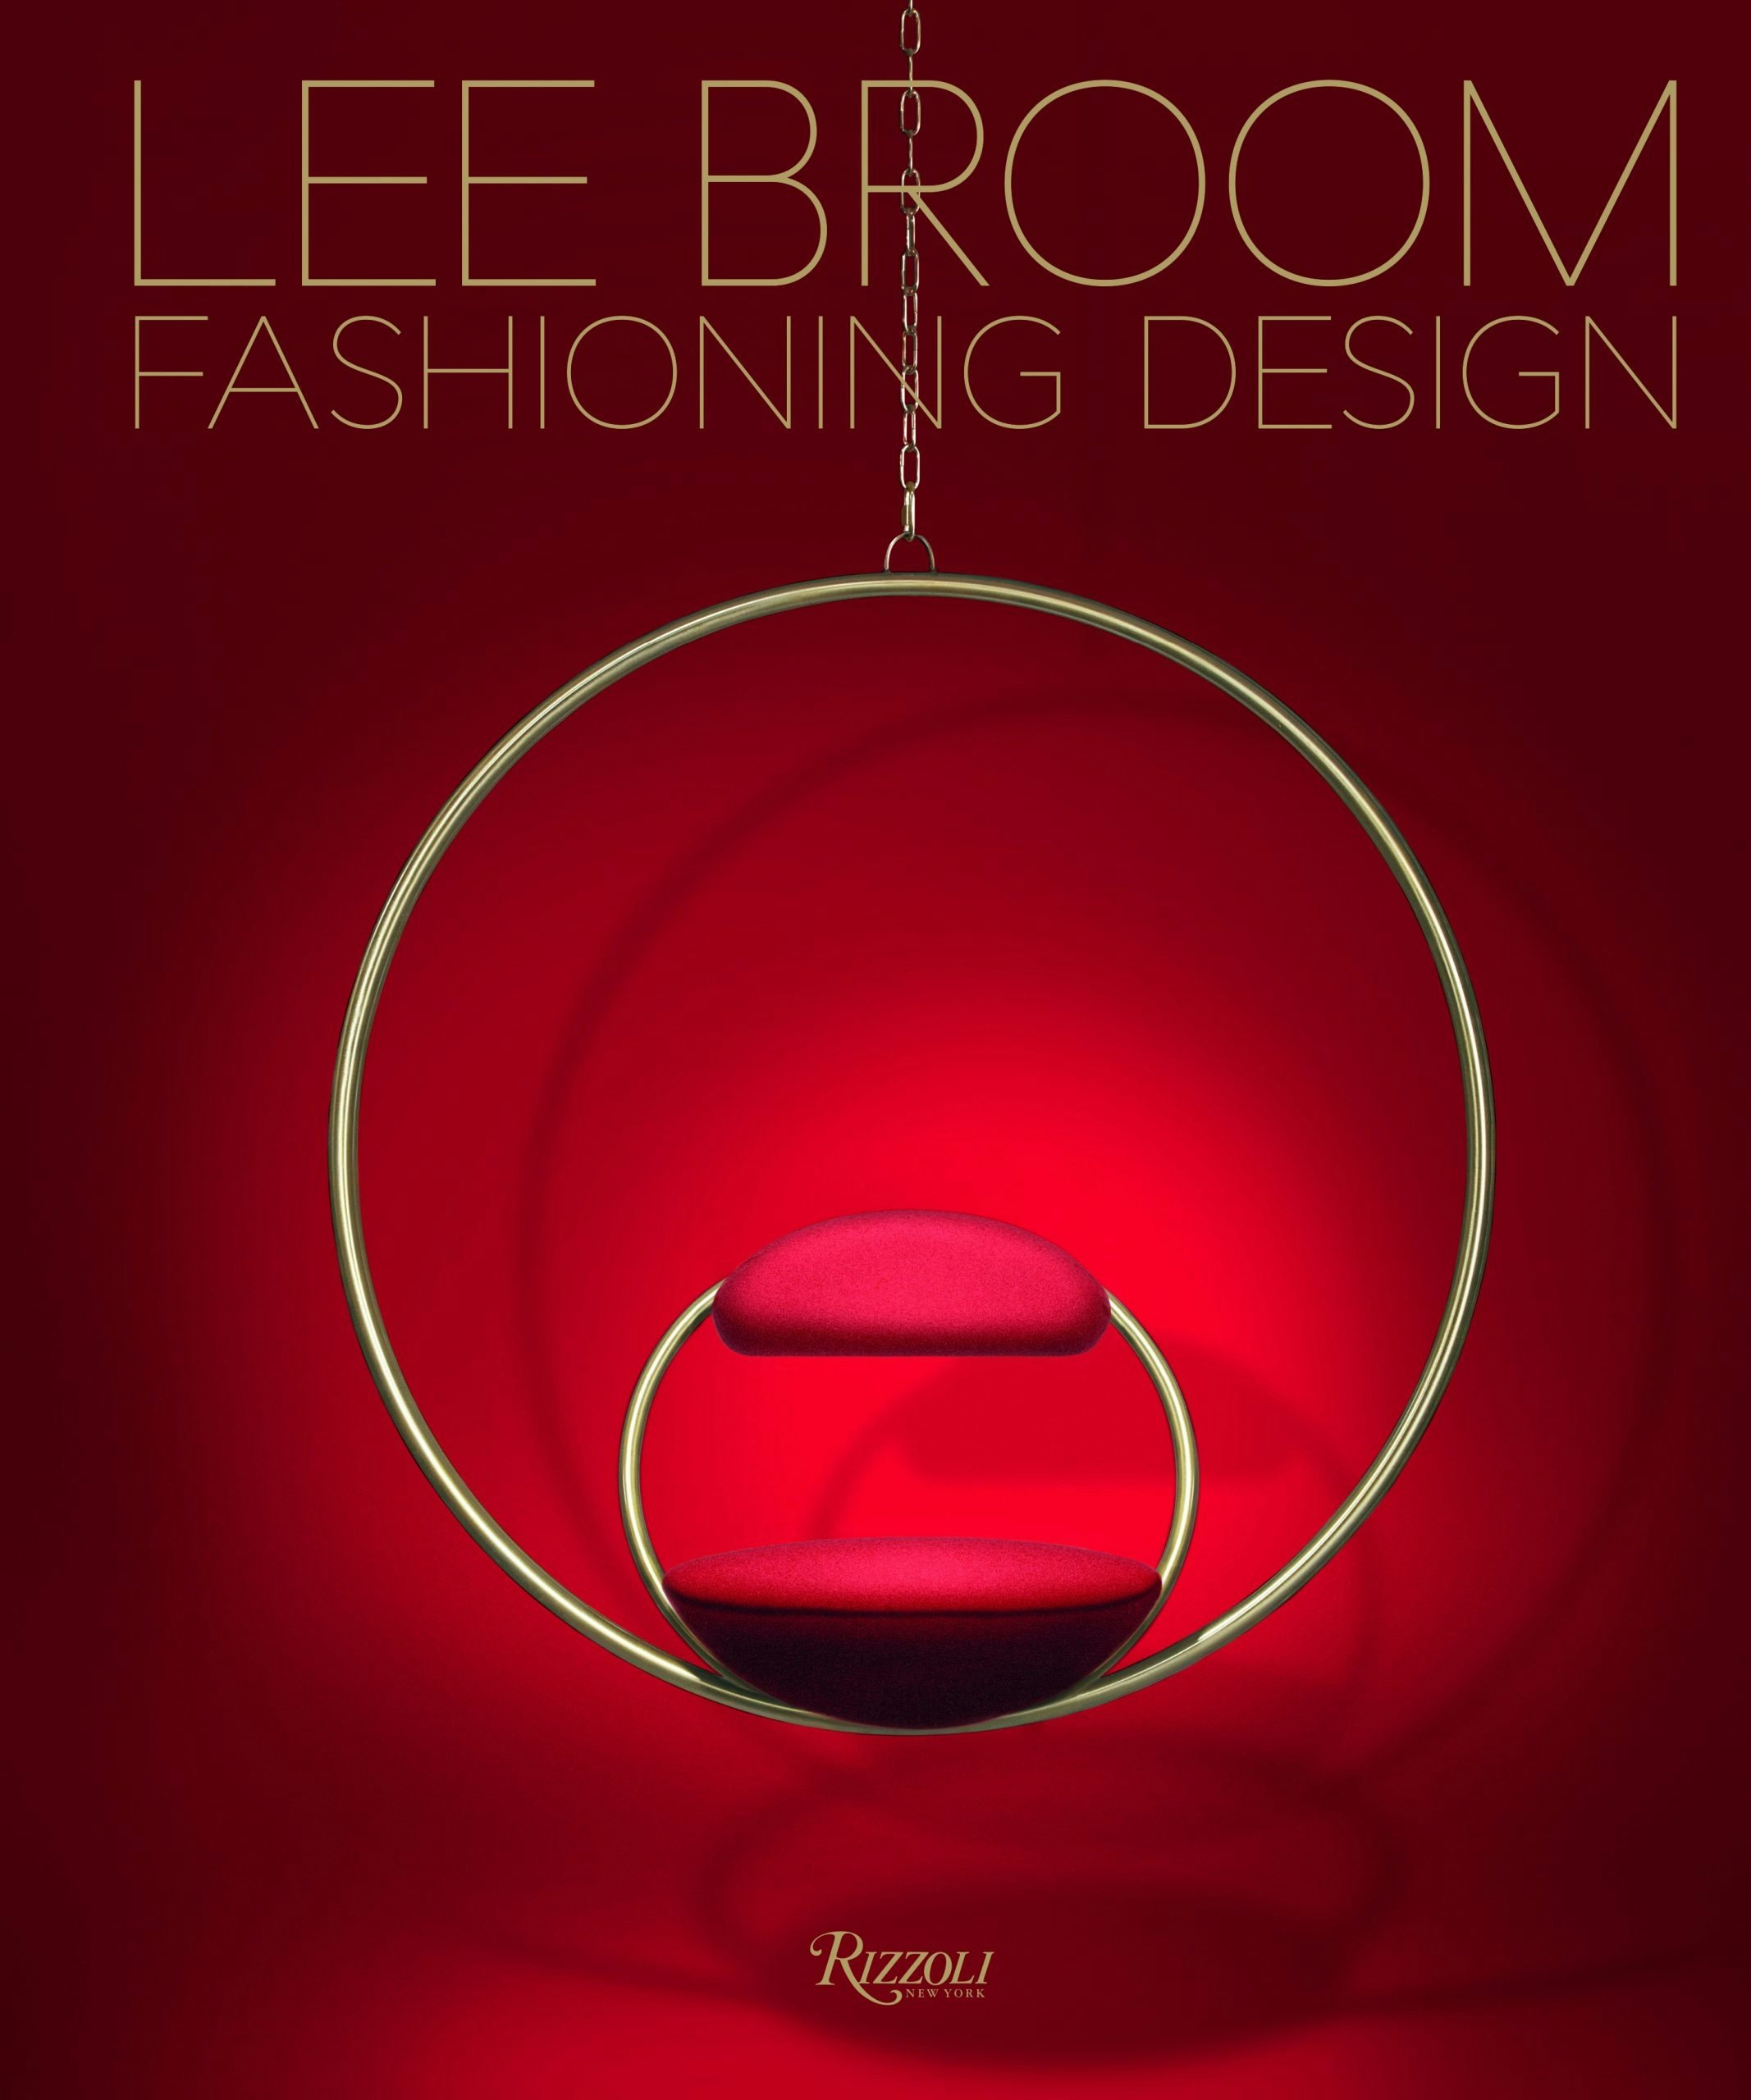 Fashioning Design by Lee Broom. Photo: Lee Broom/Rizzoli New York